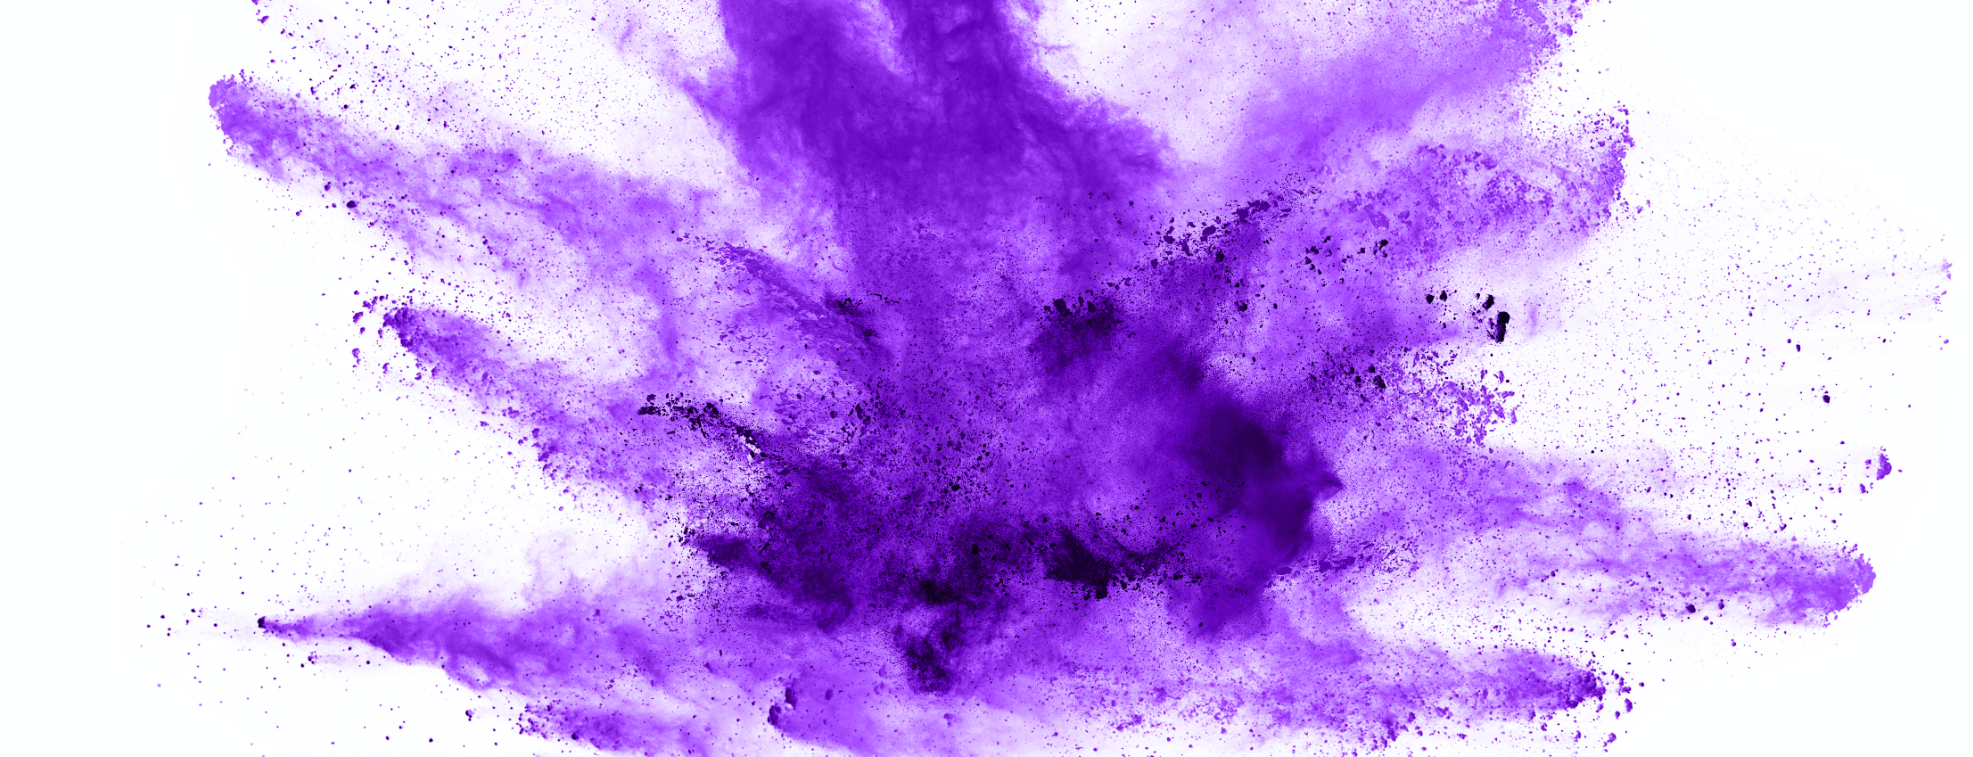 Purple paint on a white board